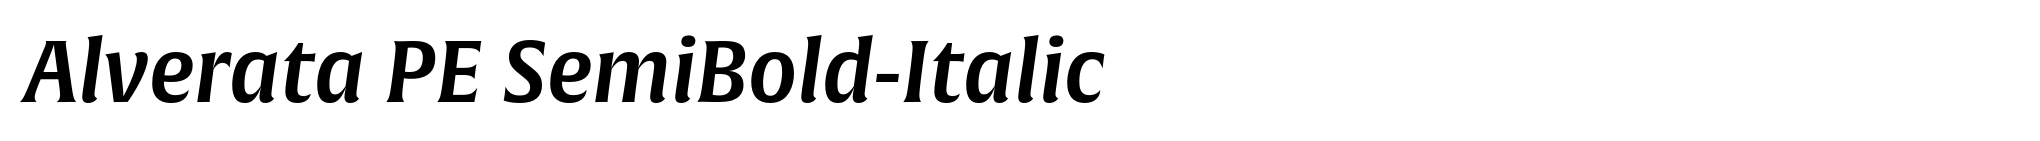 Alverata PE SemiBold-Italic image